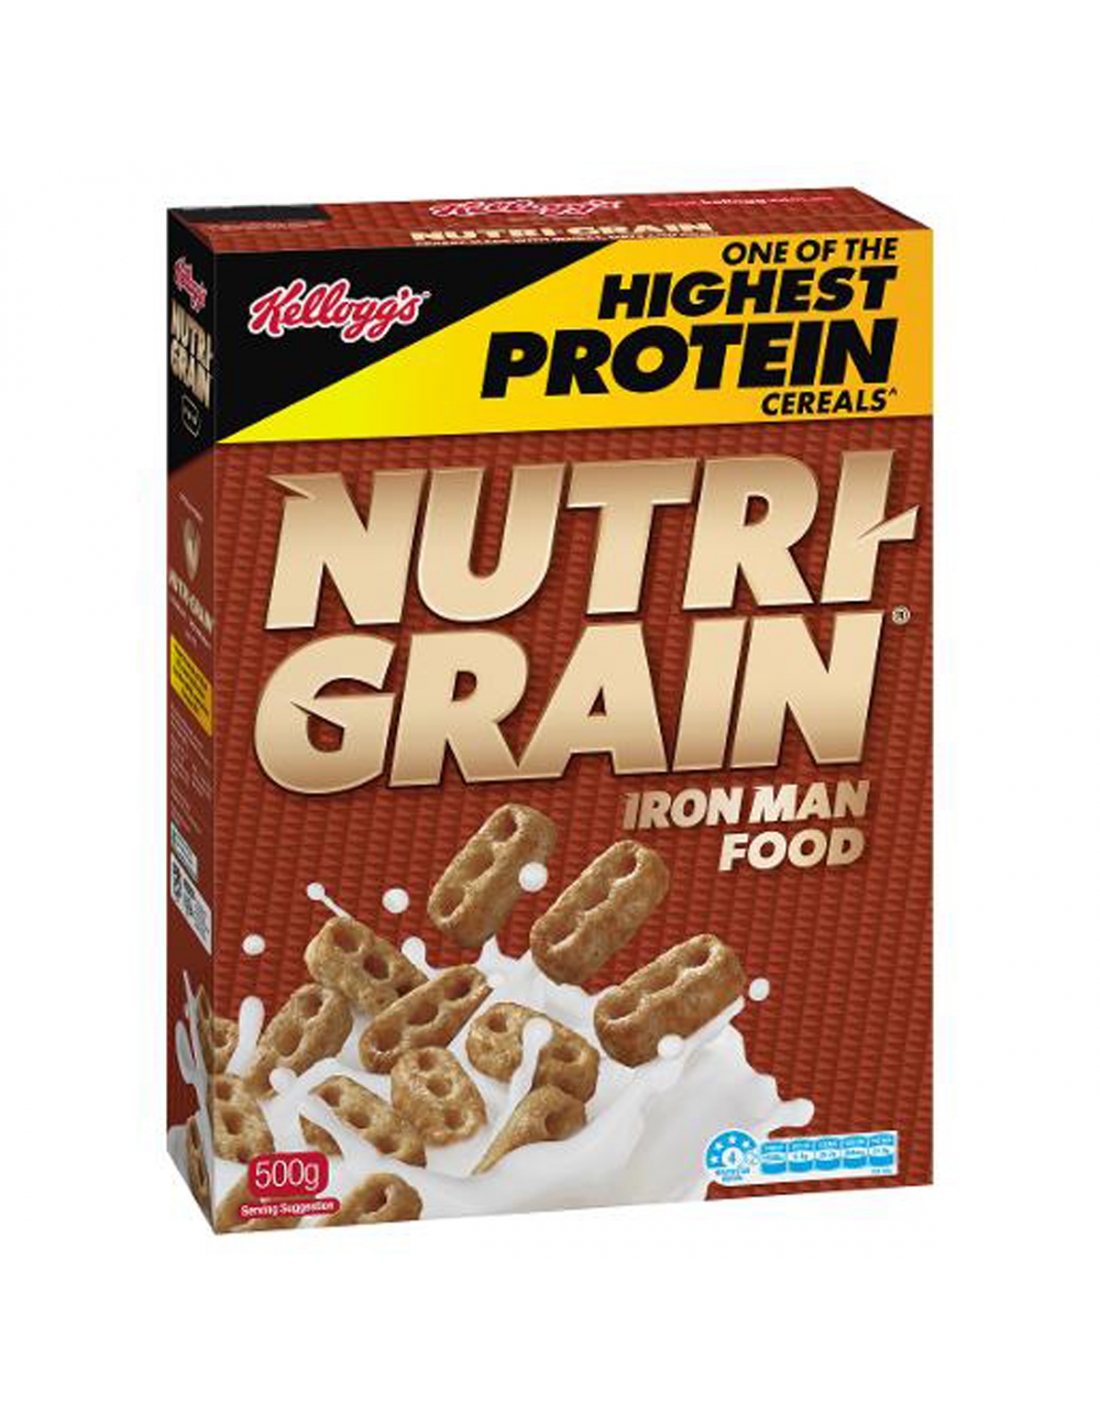 nutri grain bars expiration date